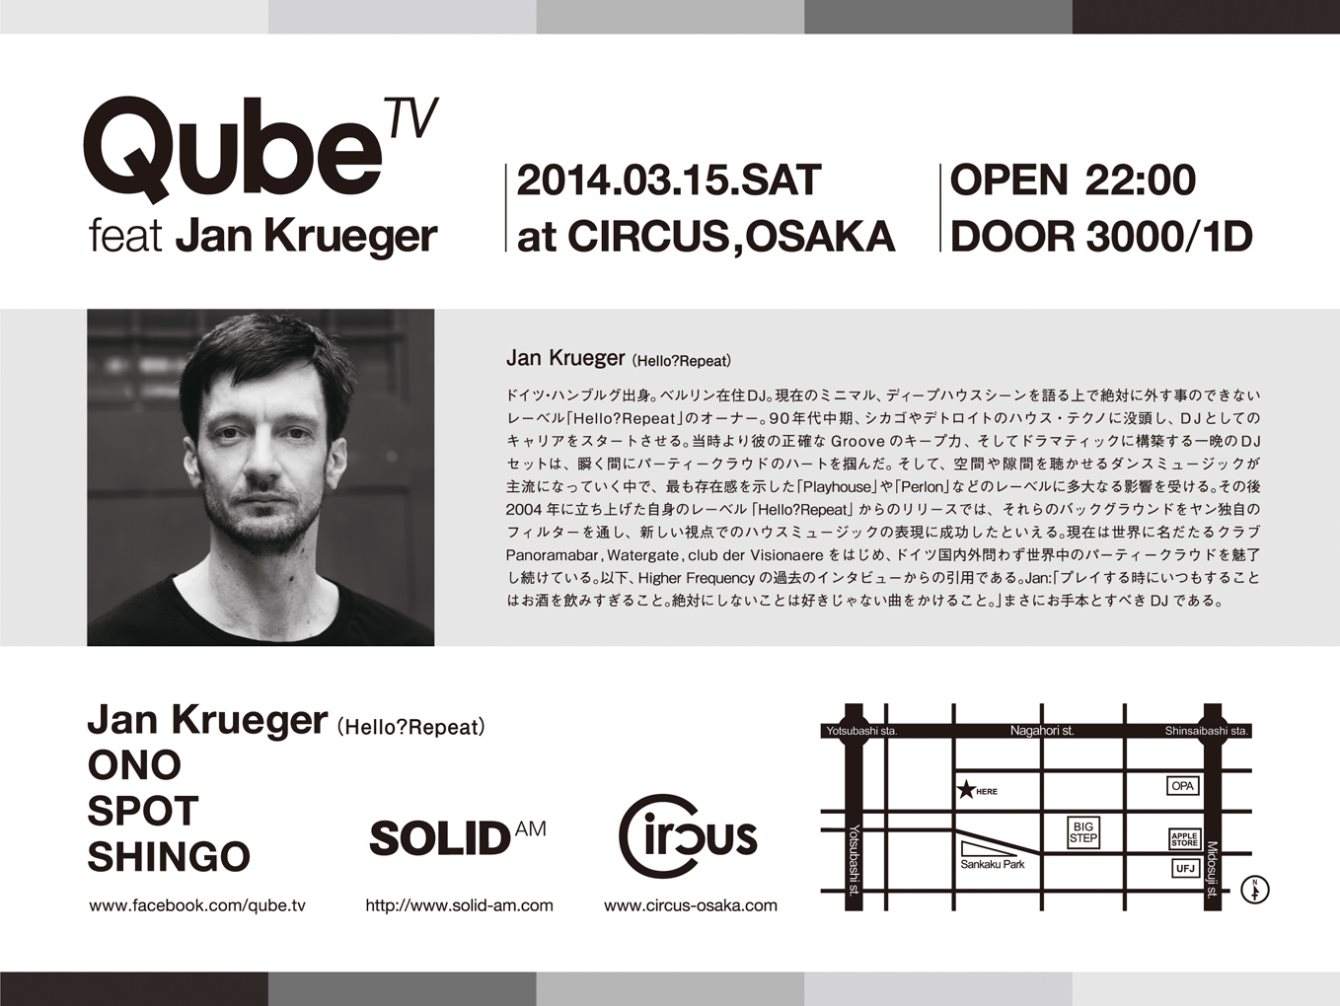 Qube.tv Feat. Jan Krueger - フライヤー裏